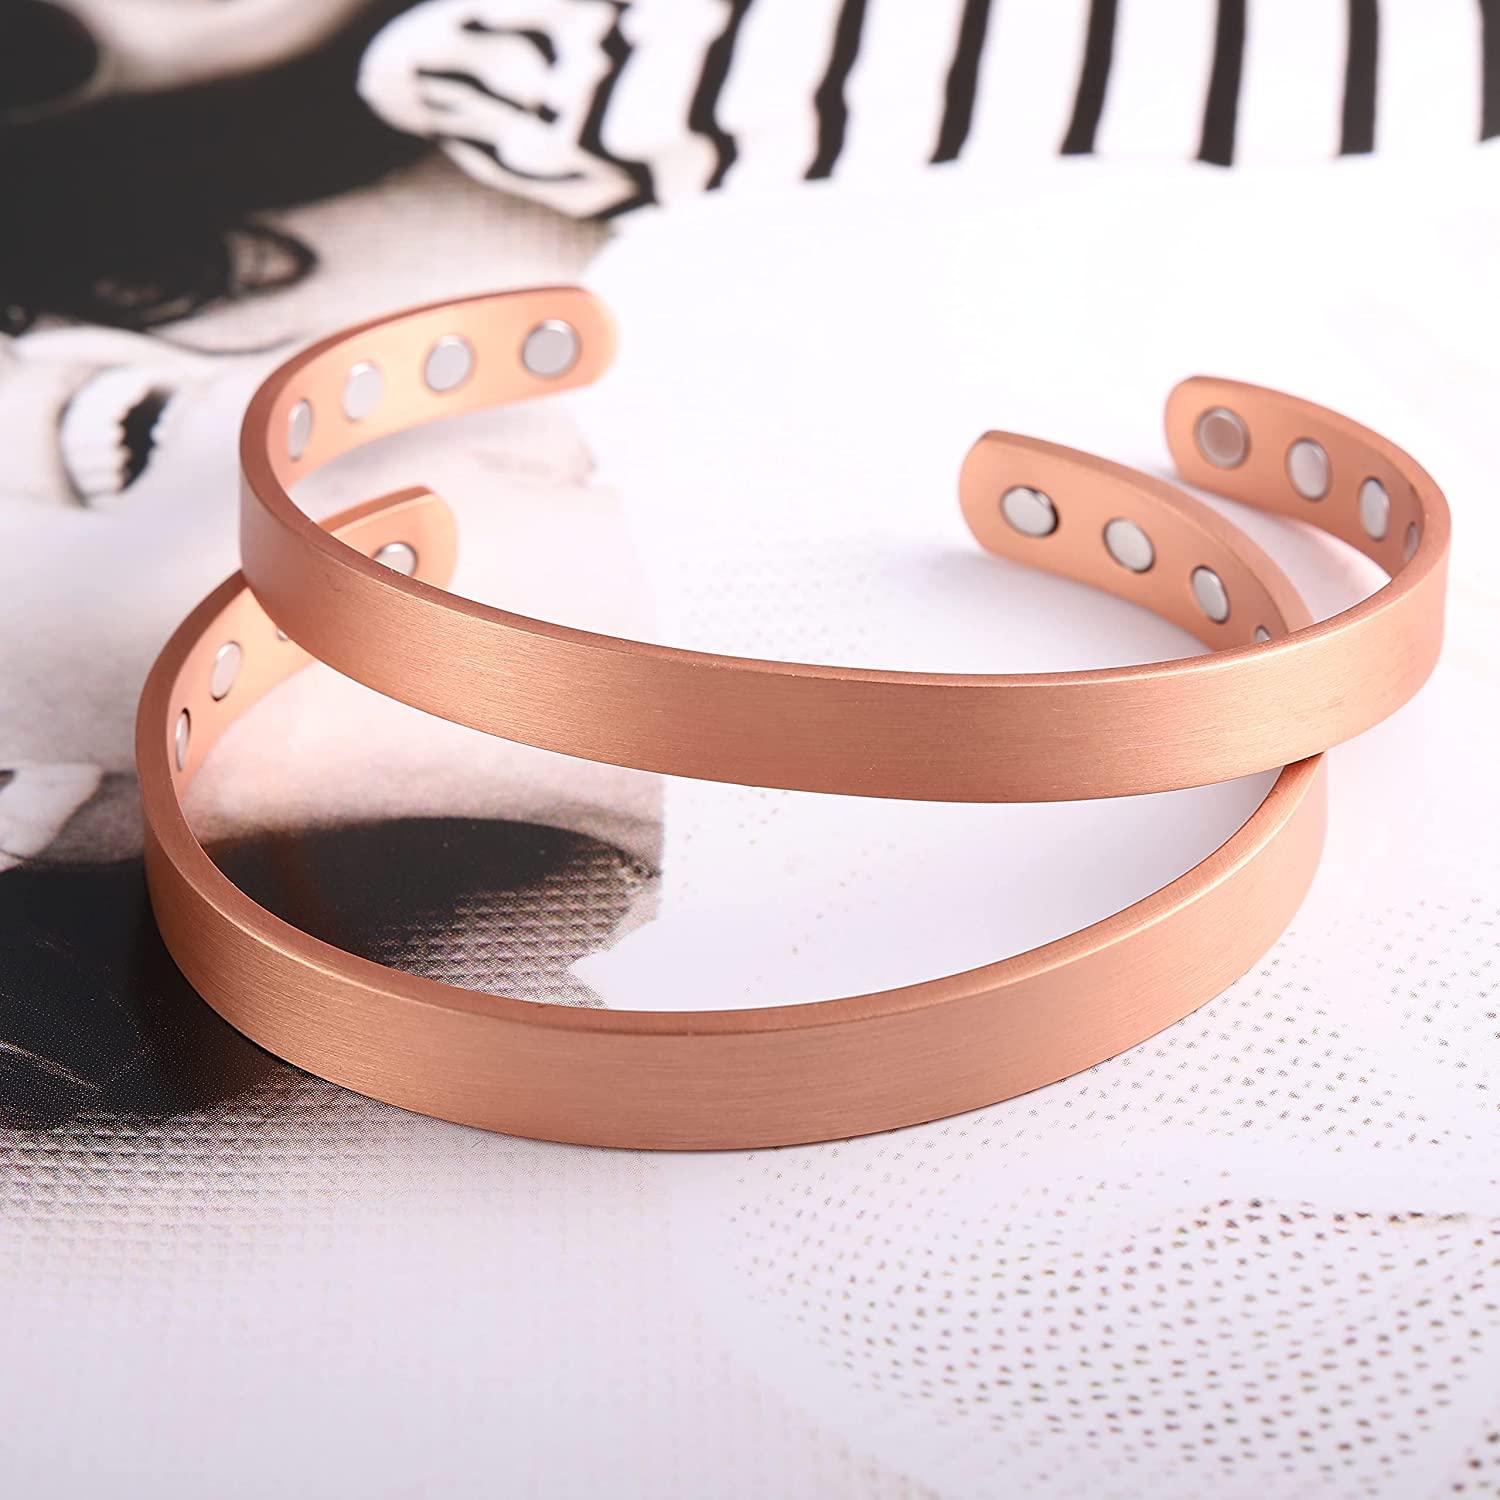 New Copper Bracelet 100% Magnetic Therapy Bracelet Arthritis Relief.  Handmade | eBay